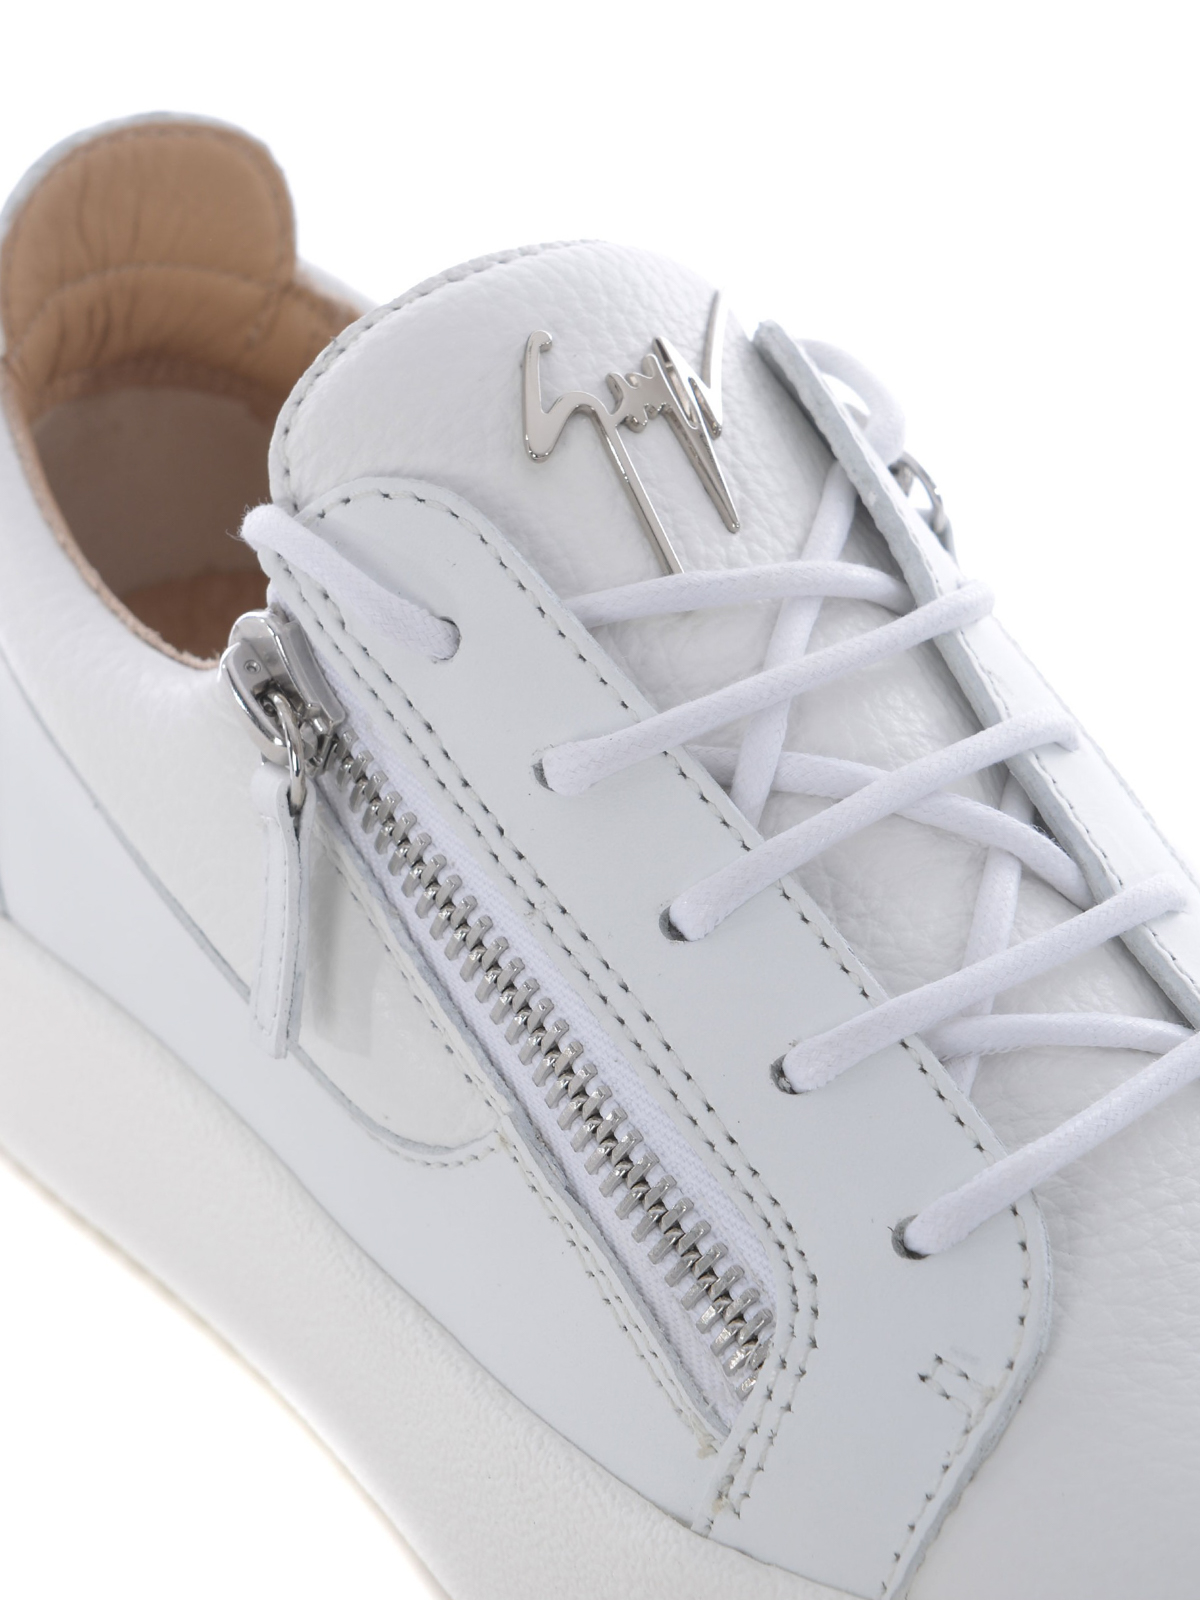 Trainers Giuseppe Zanotti - Frankie white leather sneakers 